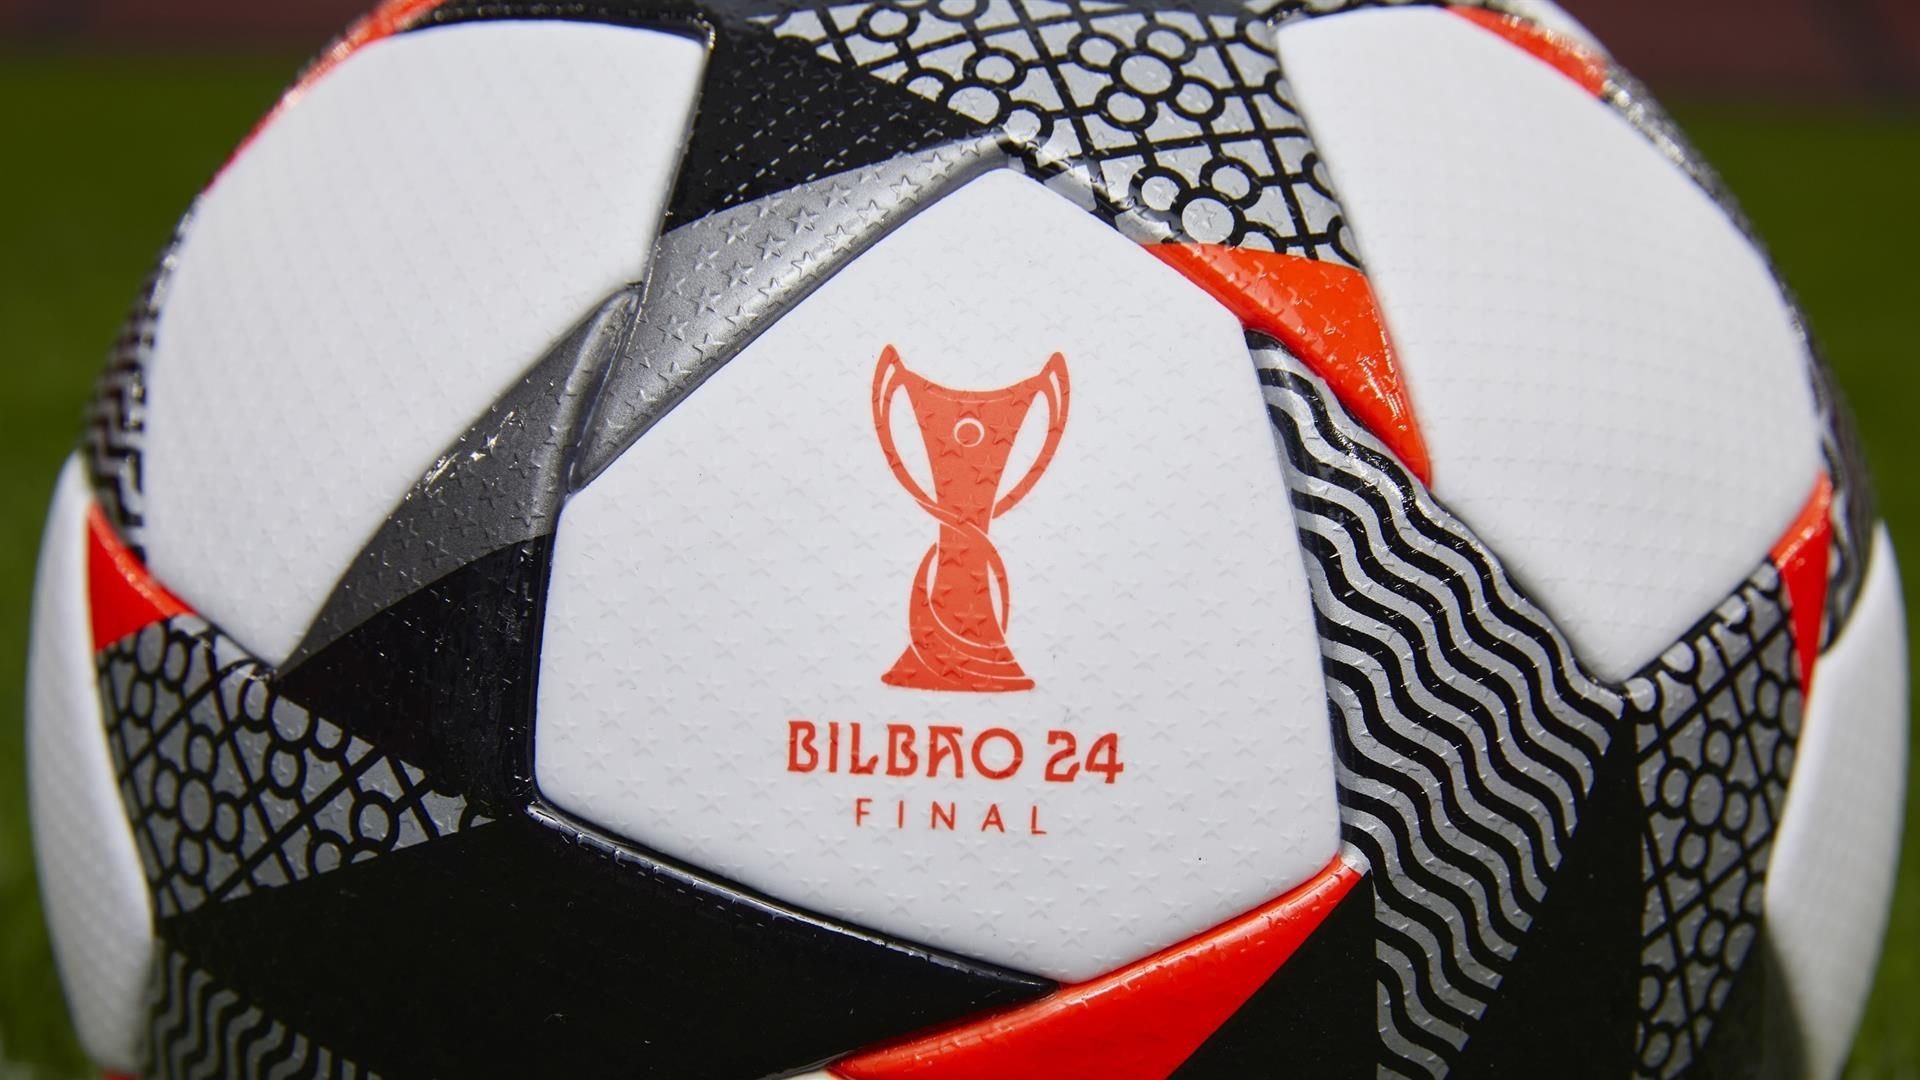 Champions femenina: El balón de la fase final de la Champions femenina, un  homenaje al espíritu de Bilbao y San Mamés